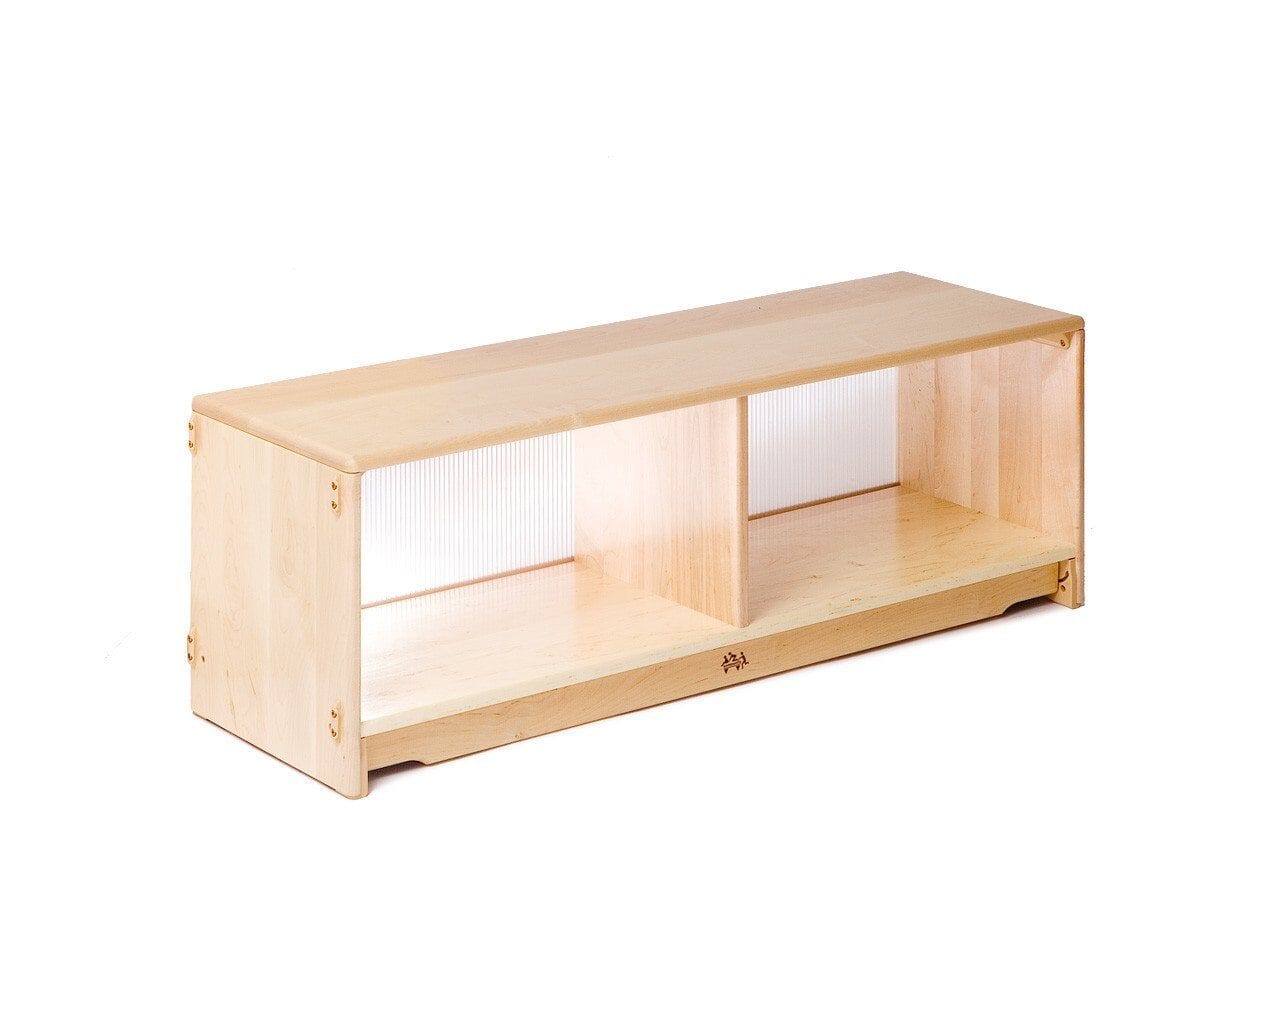 Translucent Fixed Shelf 4'X16" by Community Playthings - louisekool